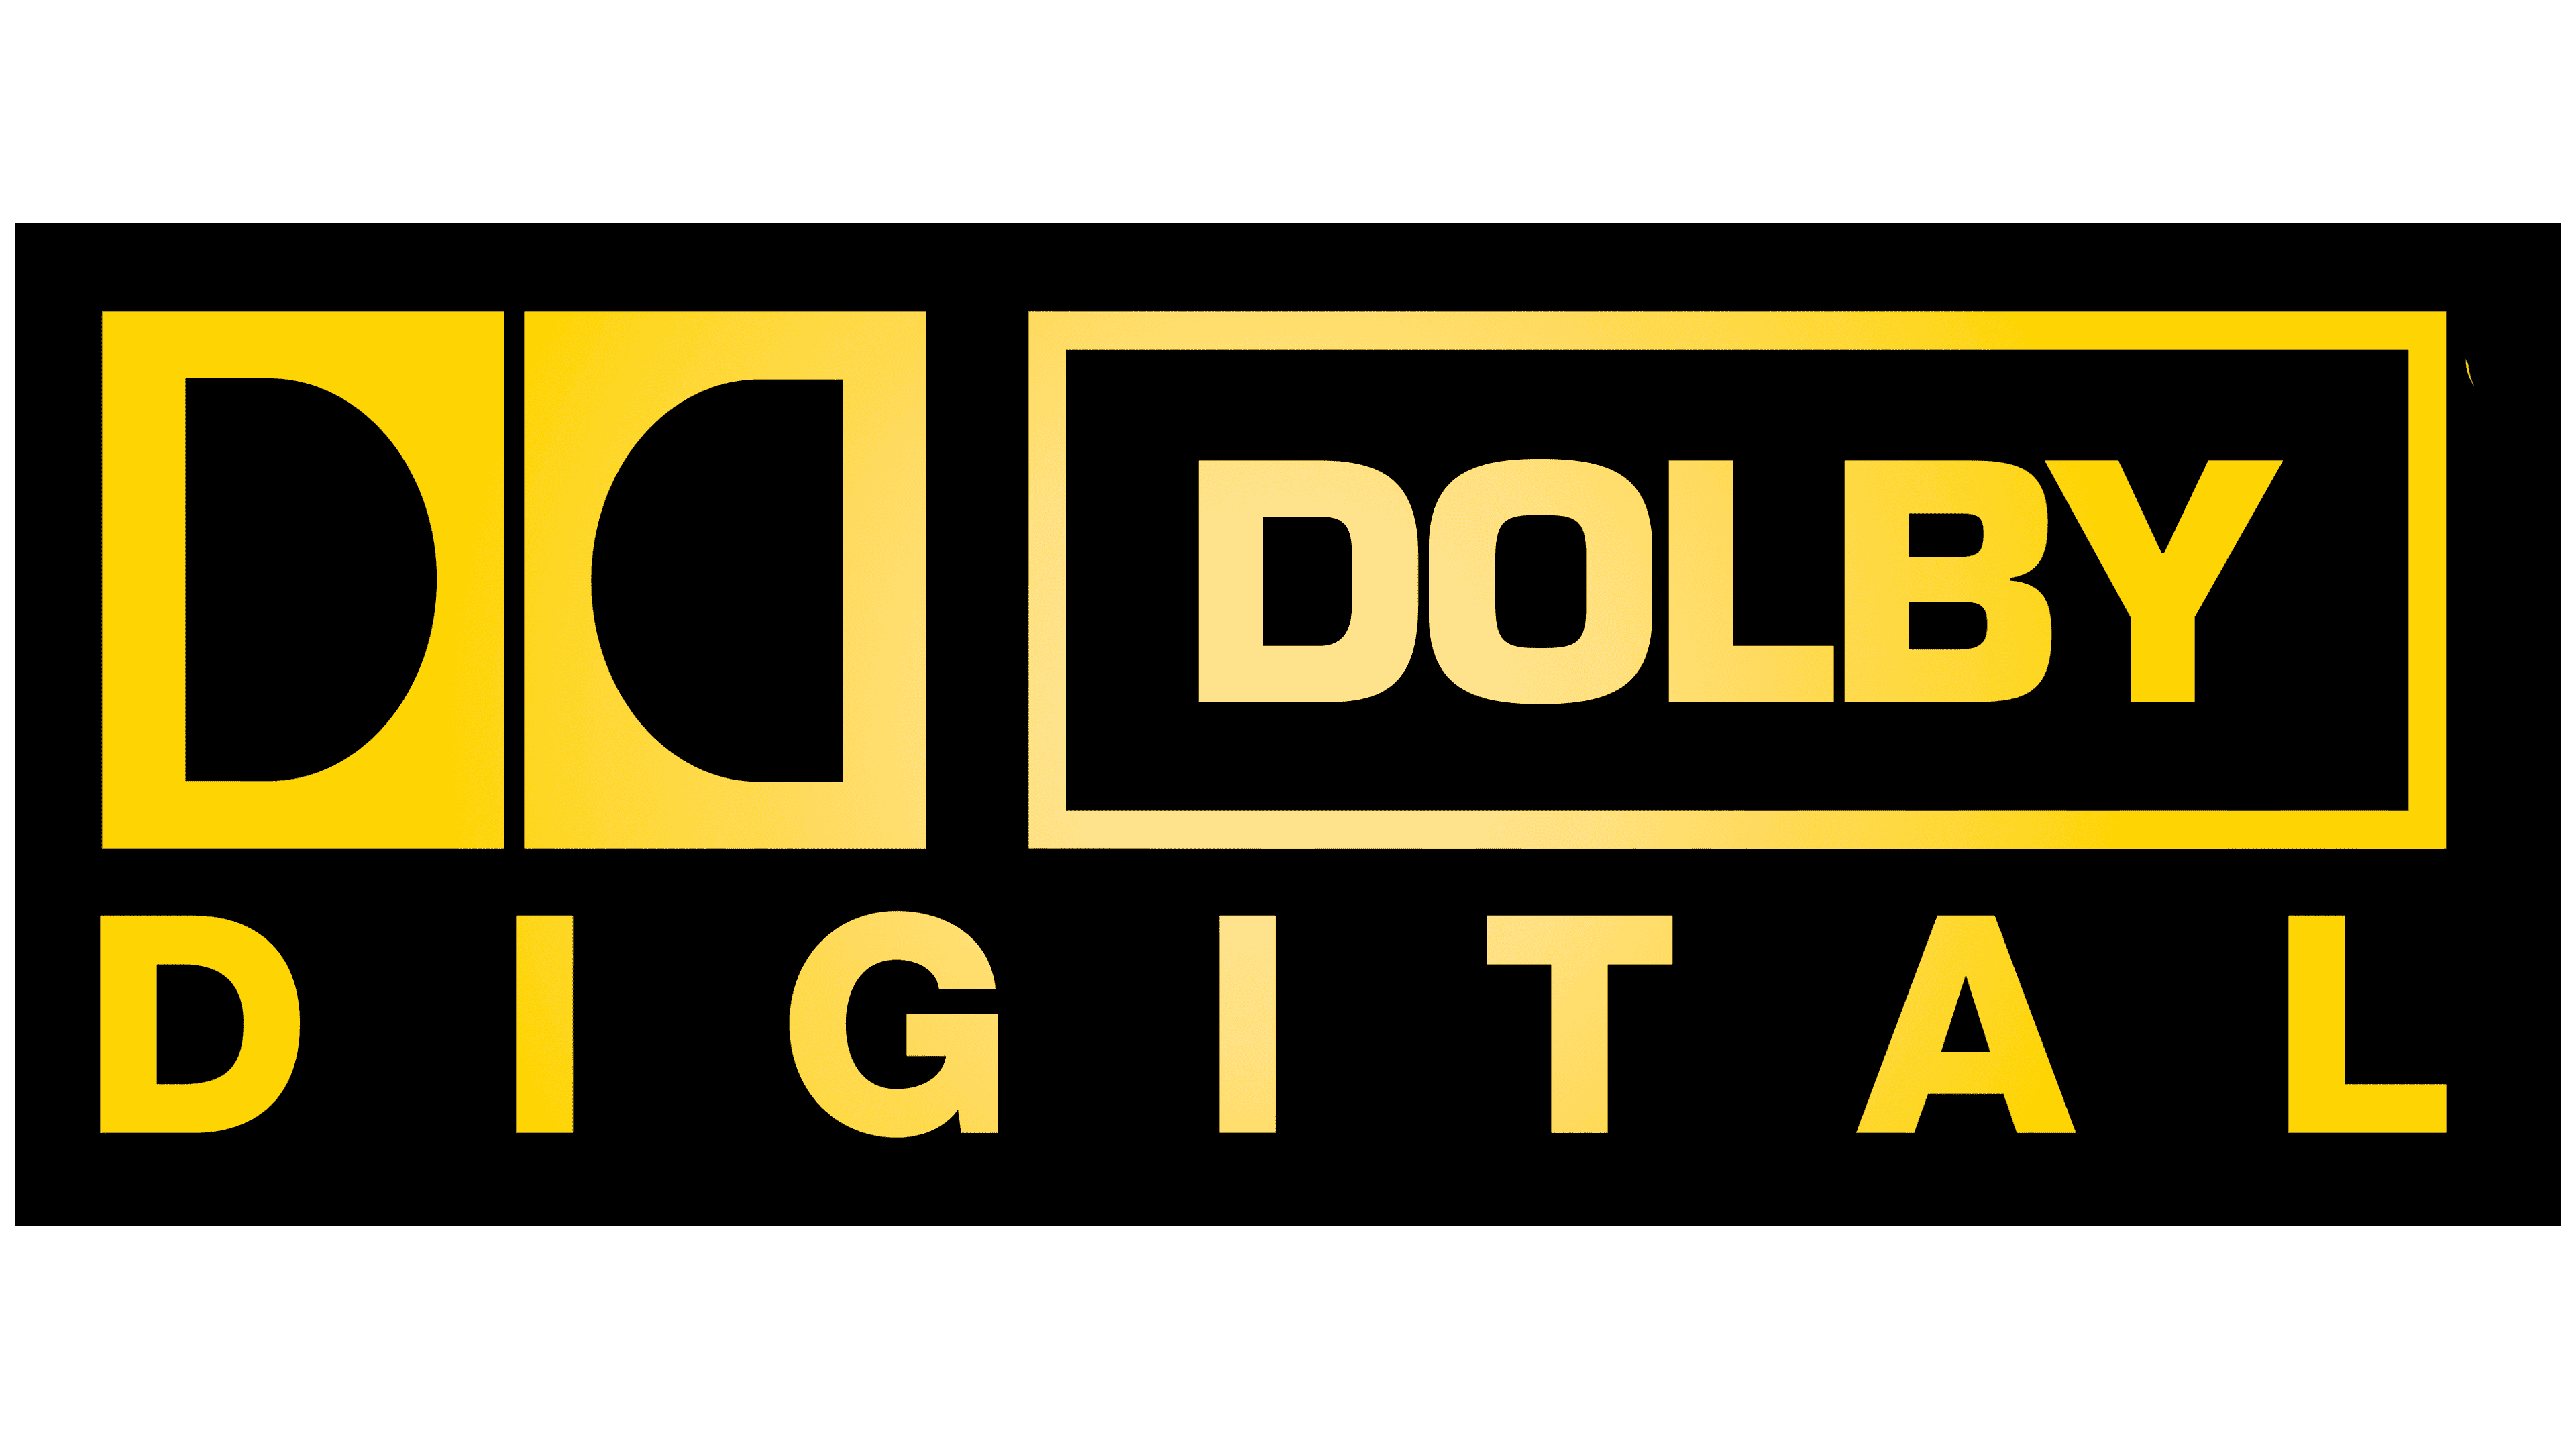 logo-dolby-digital